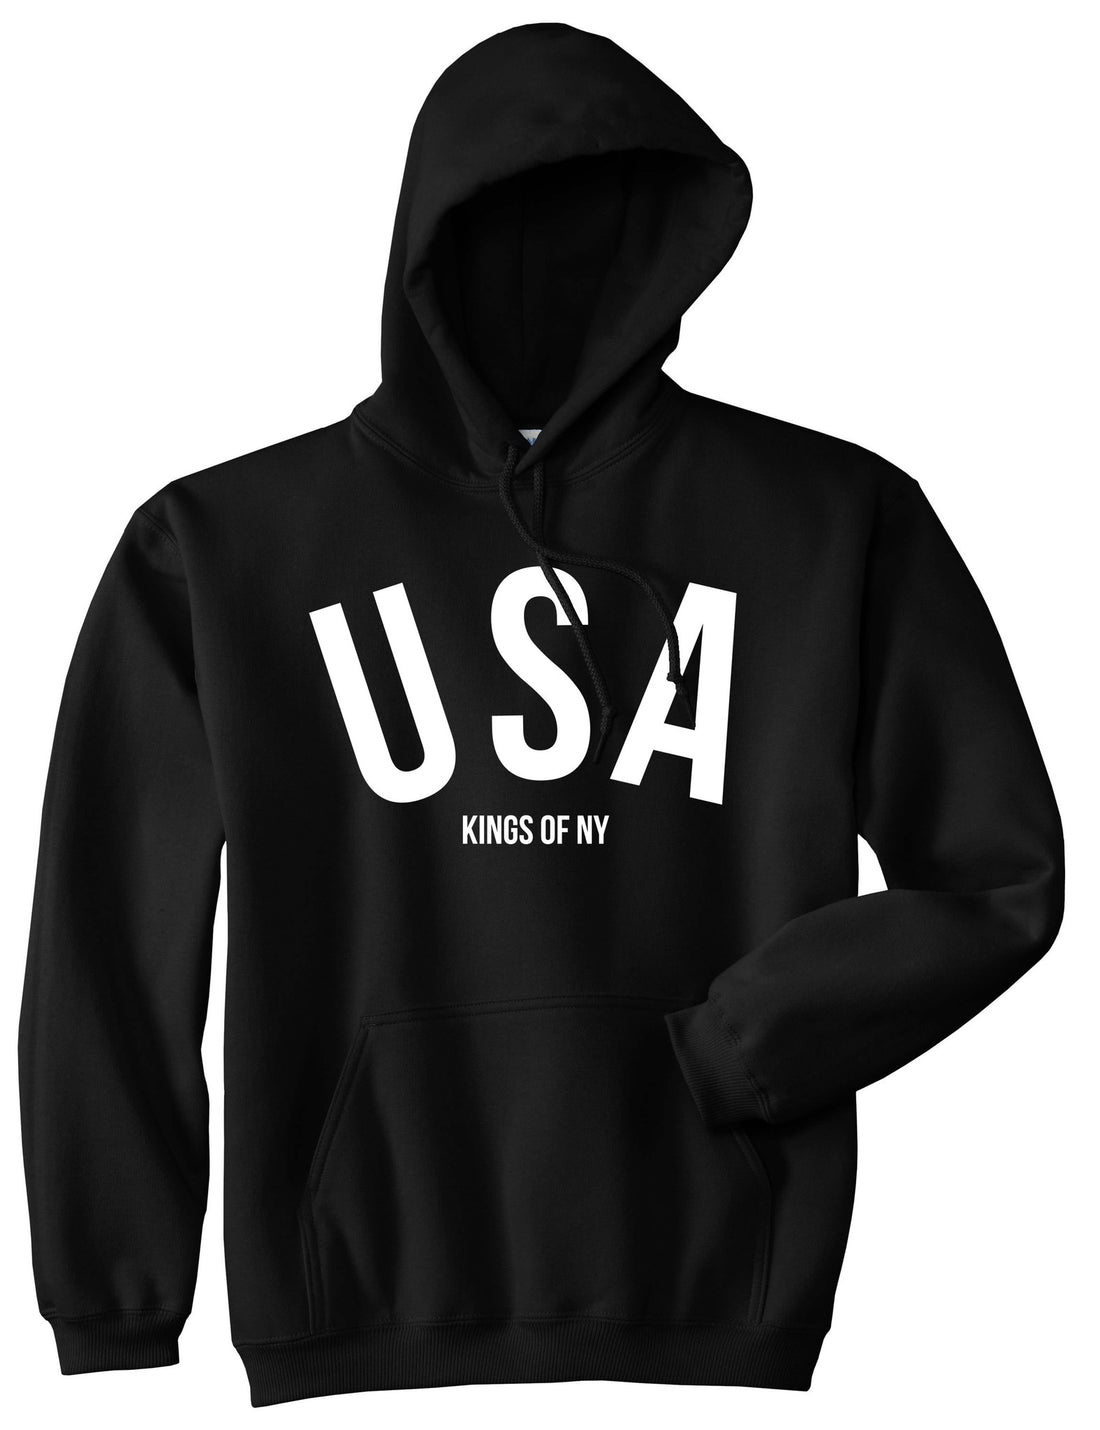 USA Pullover Hoodie Hoody in Black by Kings Of NY